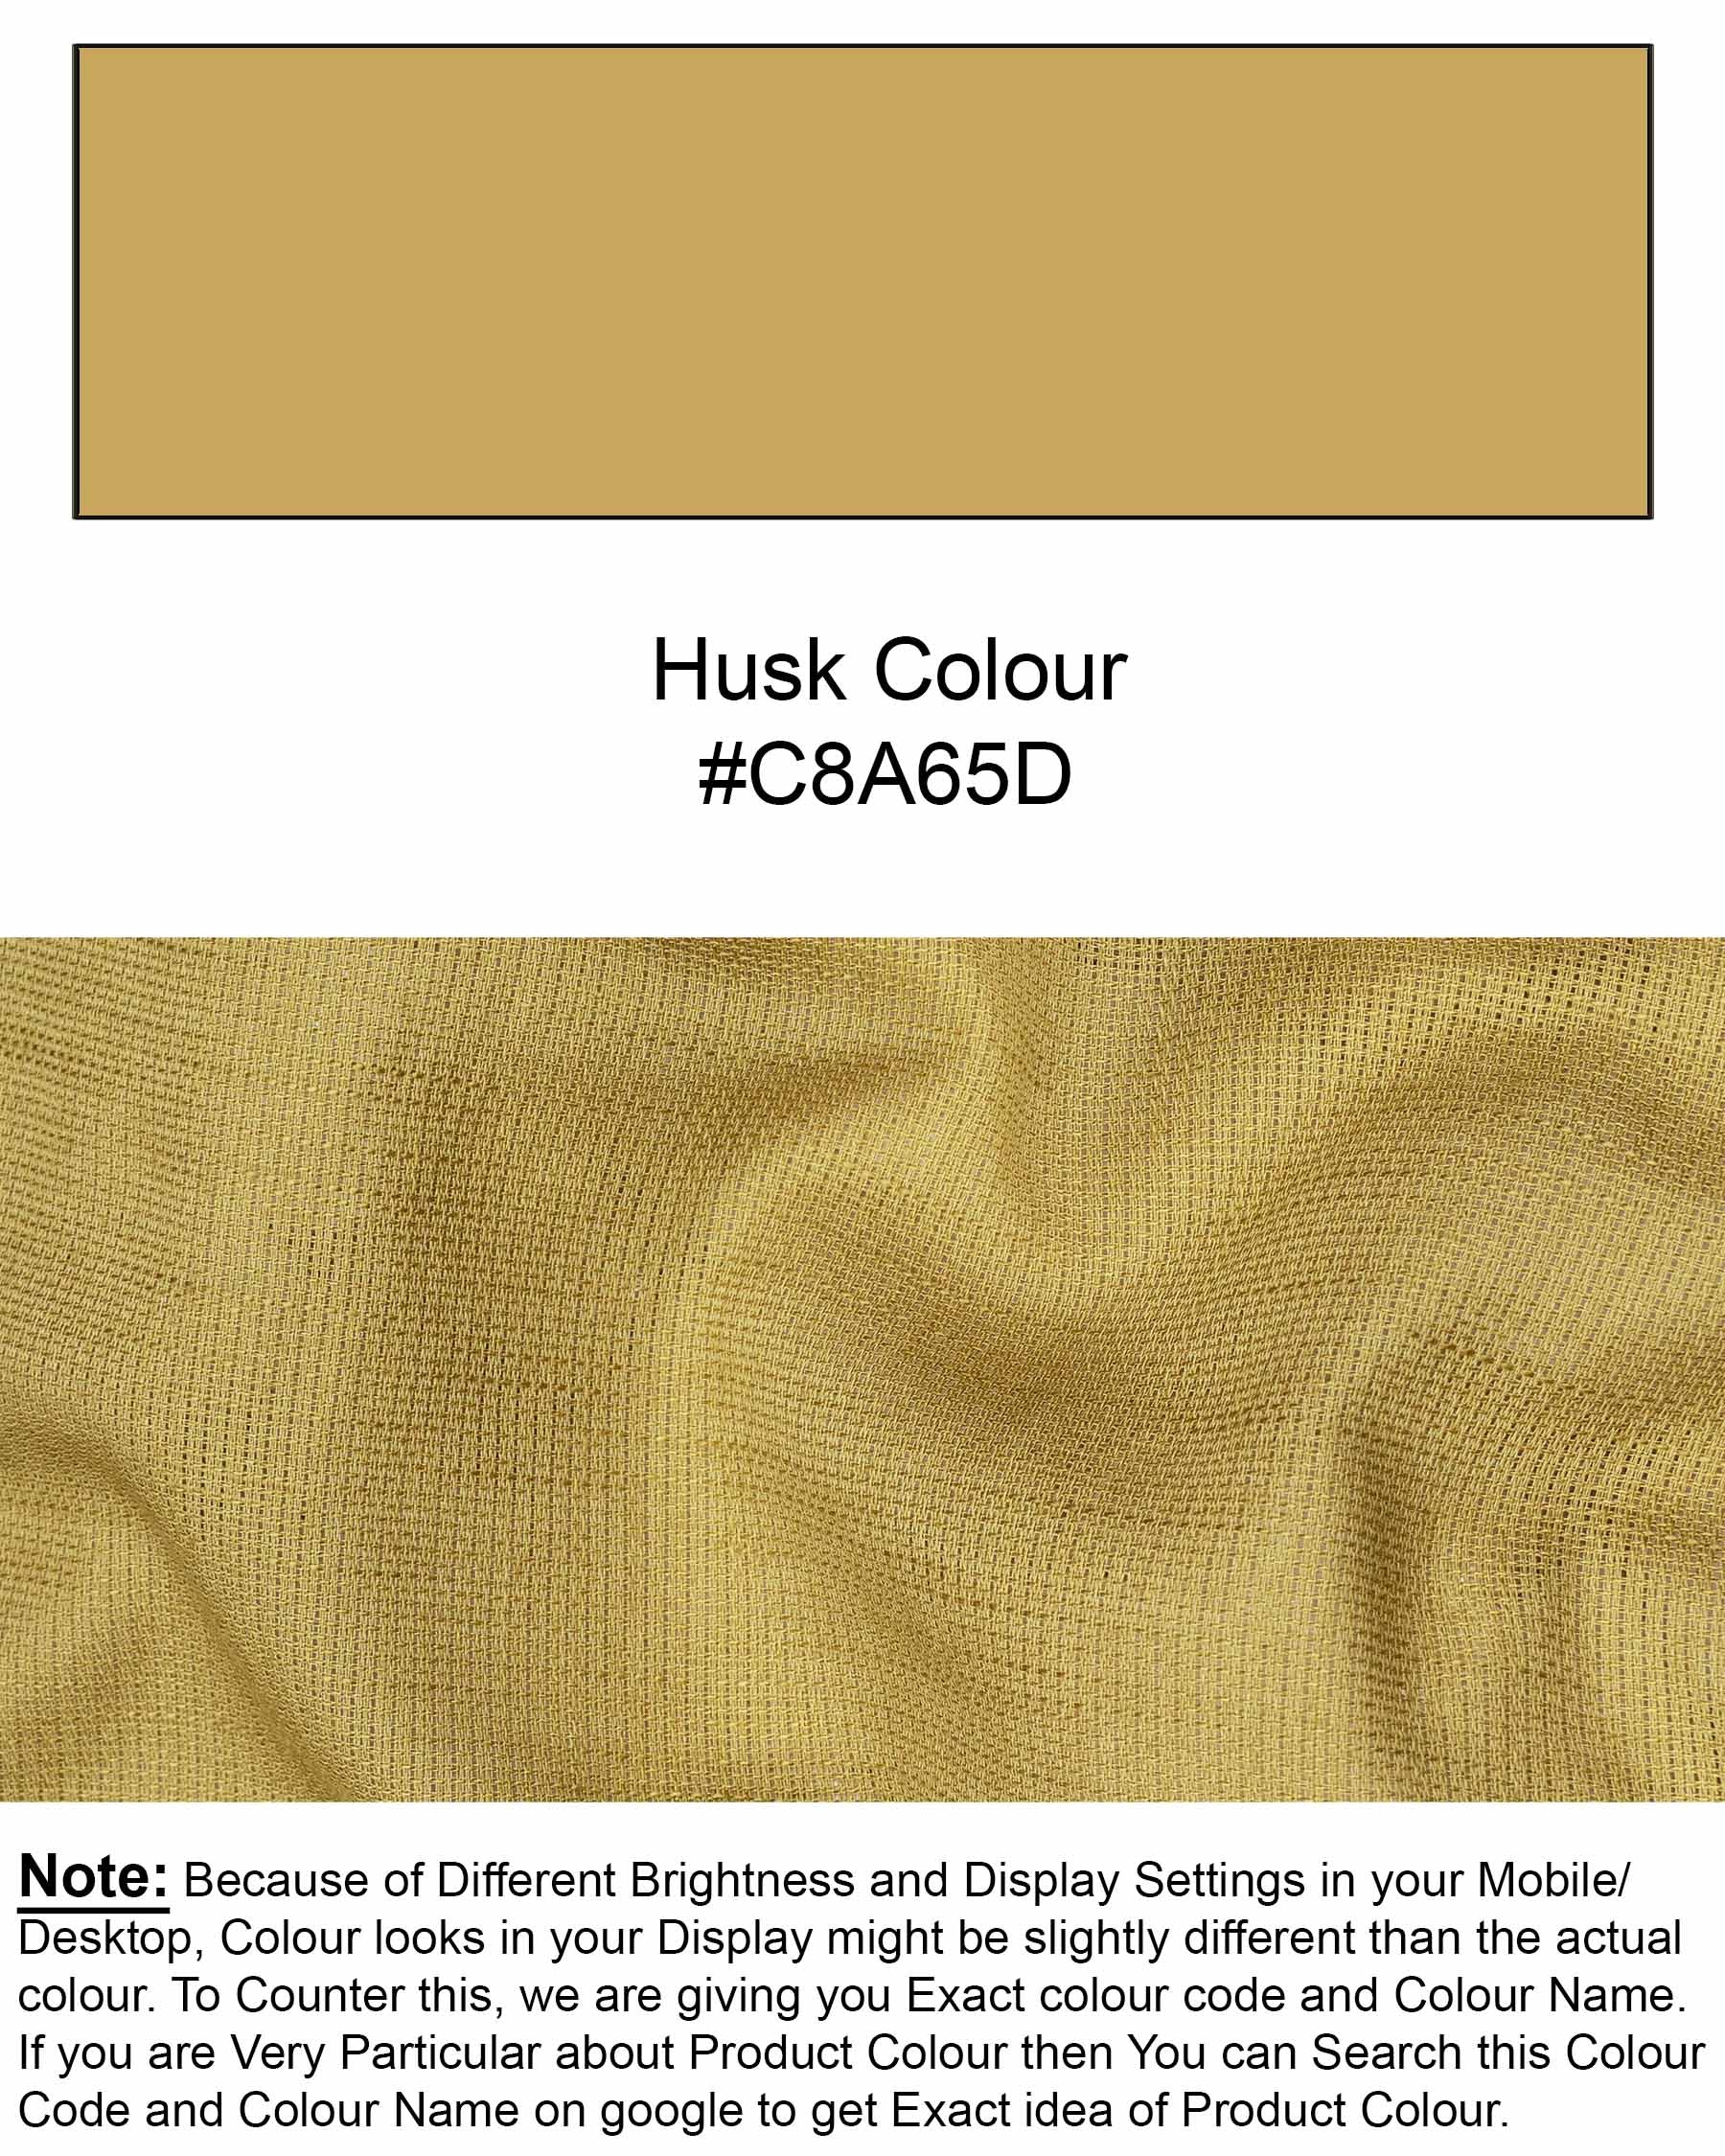 Husk Dobby  Textured Premium Giza Cotton Shirt  6507-BD-BLK-38, 6507-BD-BLK-H-38, 6507-BD-BLK-39, 6507-BD-BLK-H-39, 6507-BD-BLK-40, 6507-BD-BLK-H-40, 6507-BD-BLK-42, 6507-BD-BLK-H-42, 6507-BD-BLK-44, 6507-BD-BLK-H-44, 6507-BD-BLK-46, 6507-BD-BLK-H-46, 6507-BD-BLK-48, 6507-BD-BLK-H-48, 6507-BD-BLK-50, 6507-BD-BLK-H-50, 6507-BD-BLK-52, 6507-BD-BLK-H-52